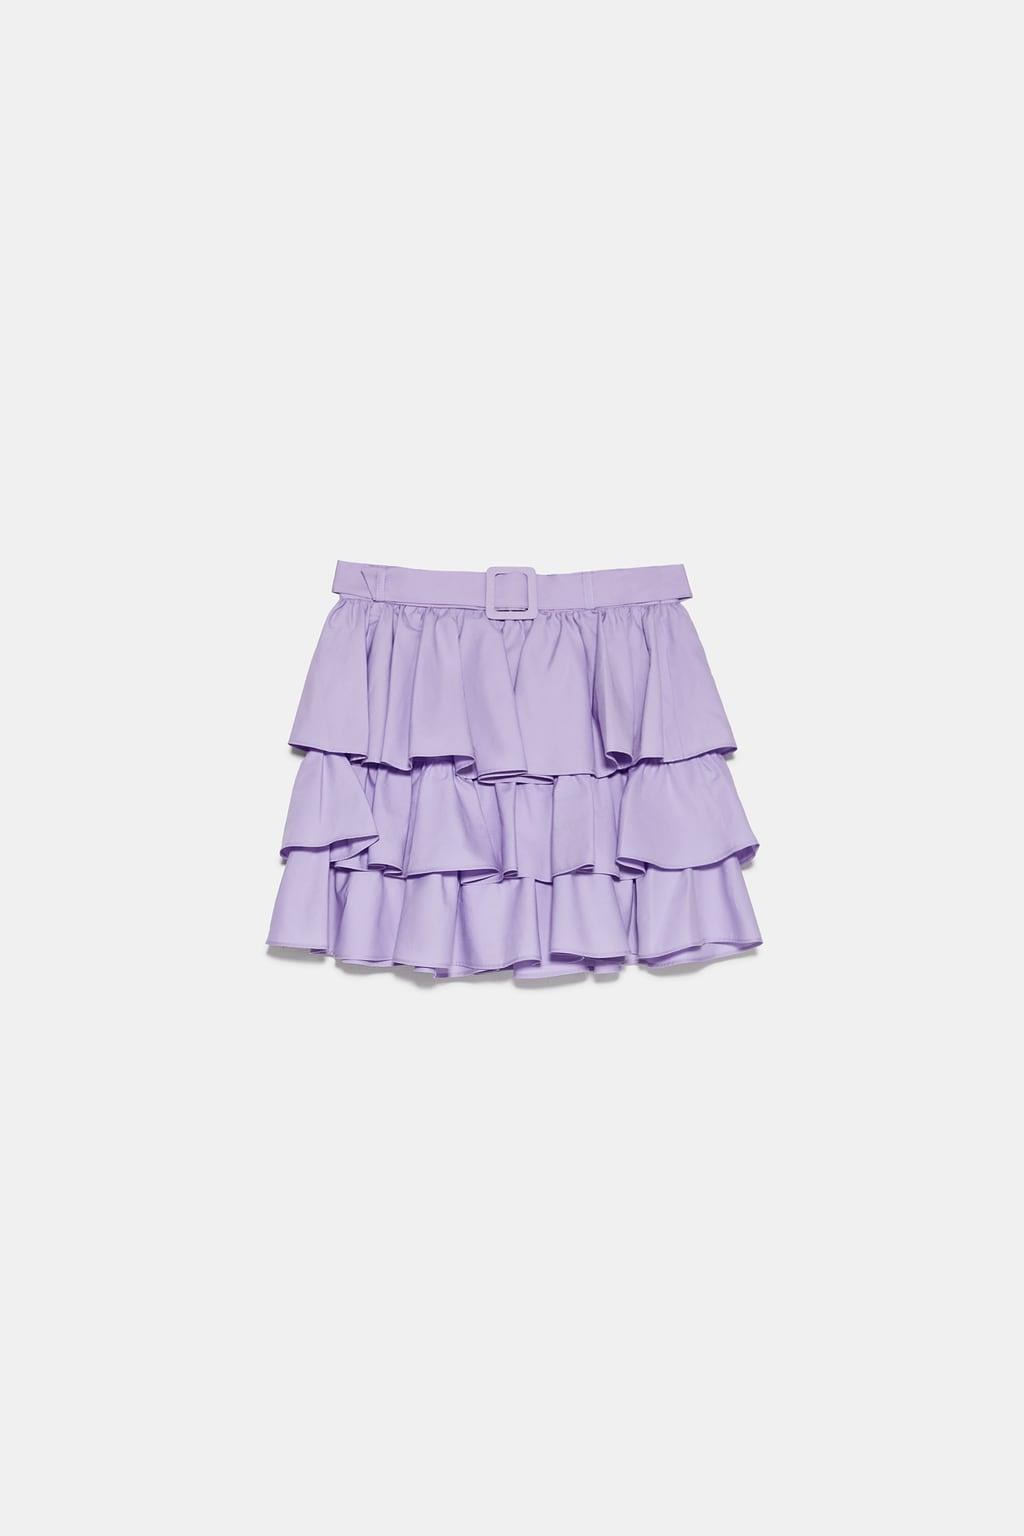 Minifalda lila con volantes, Zara